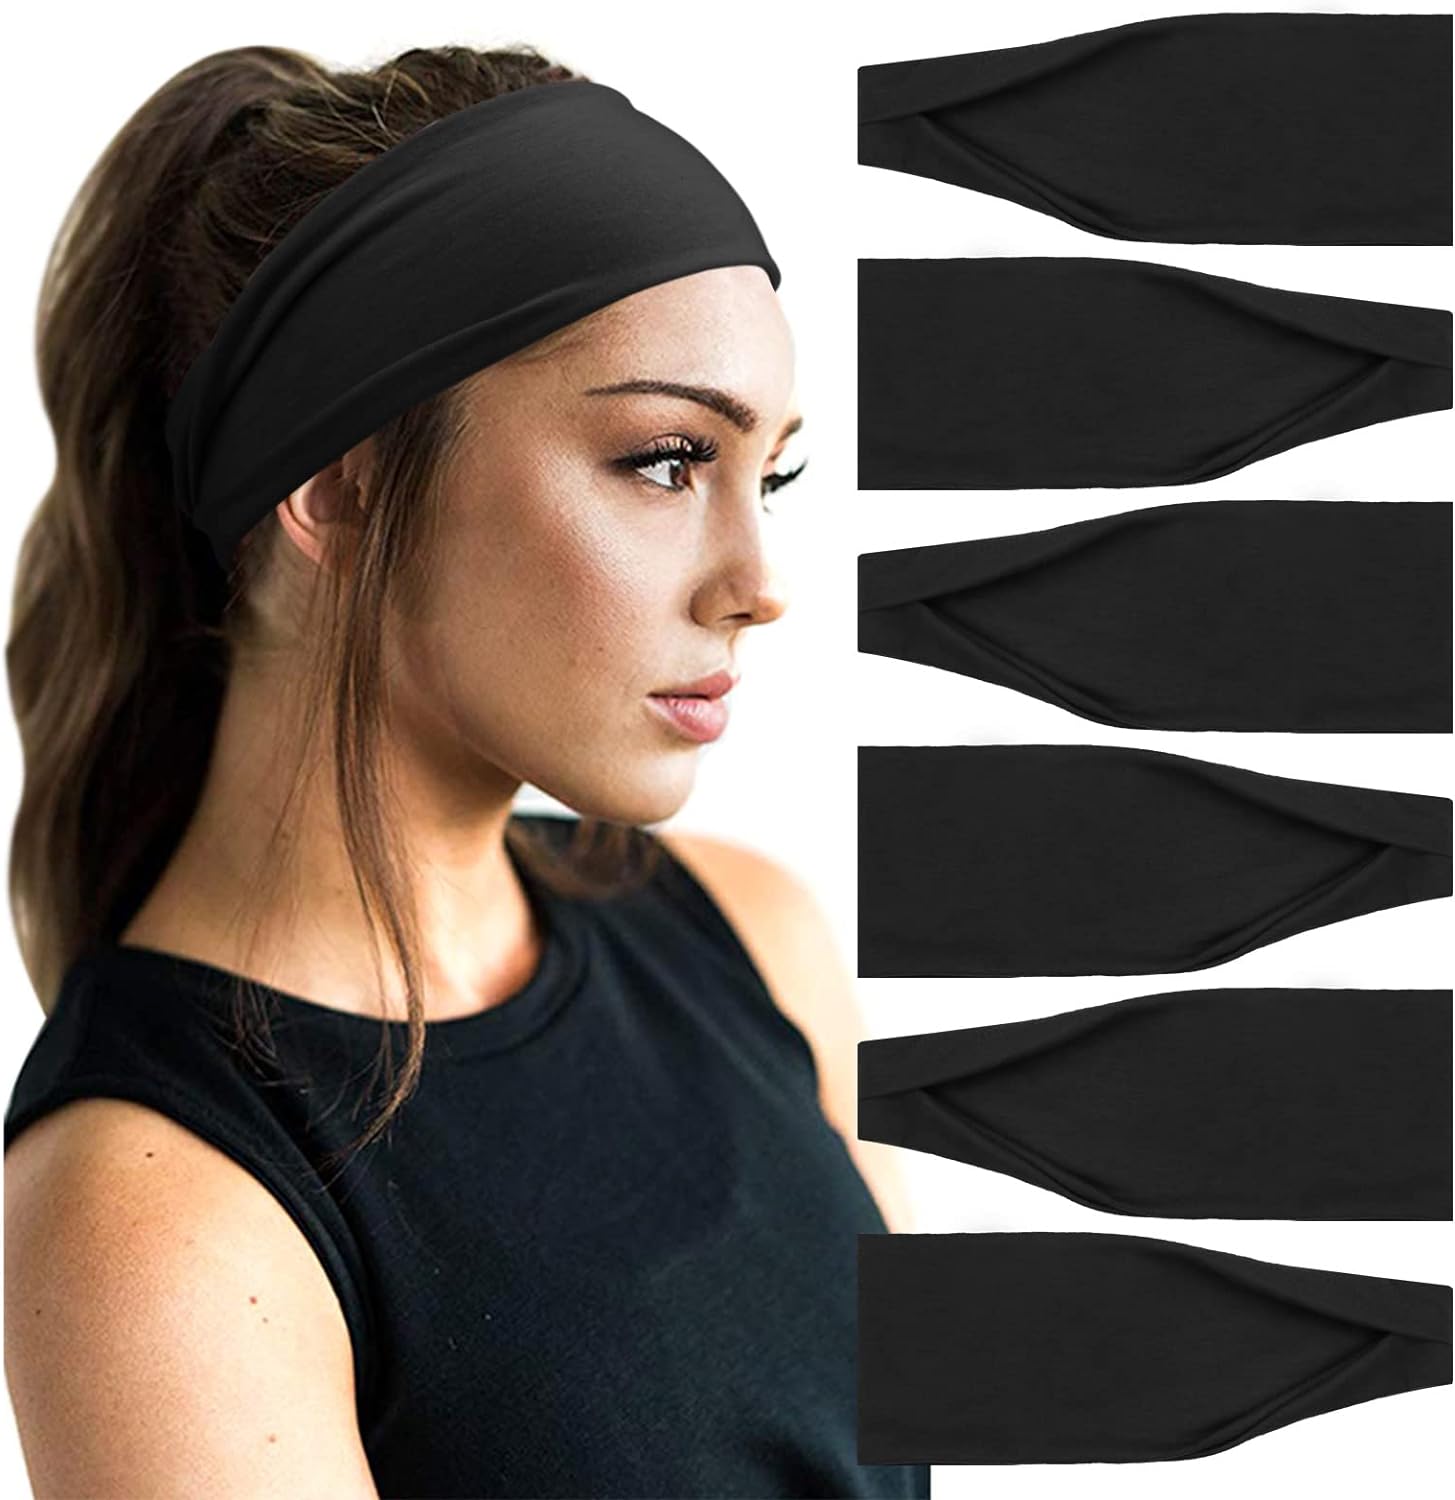 Comparing Women's Non Slip Headbands: A Comprehensive Review